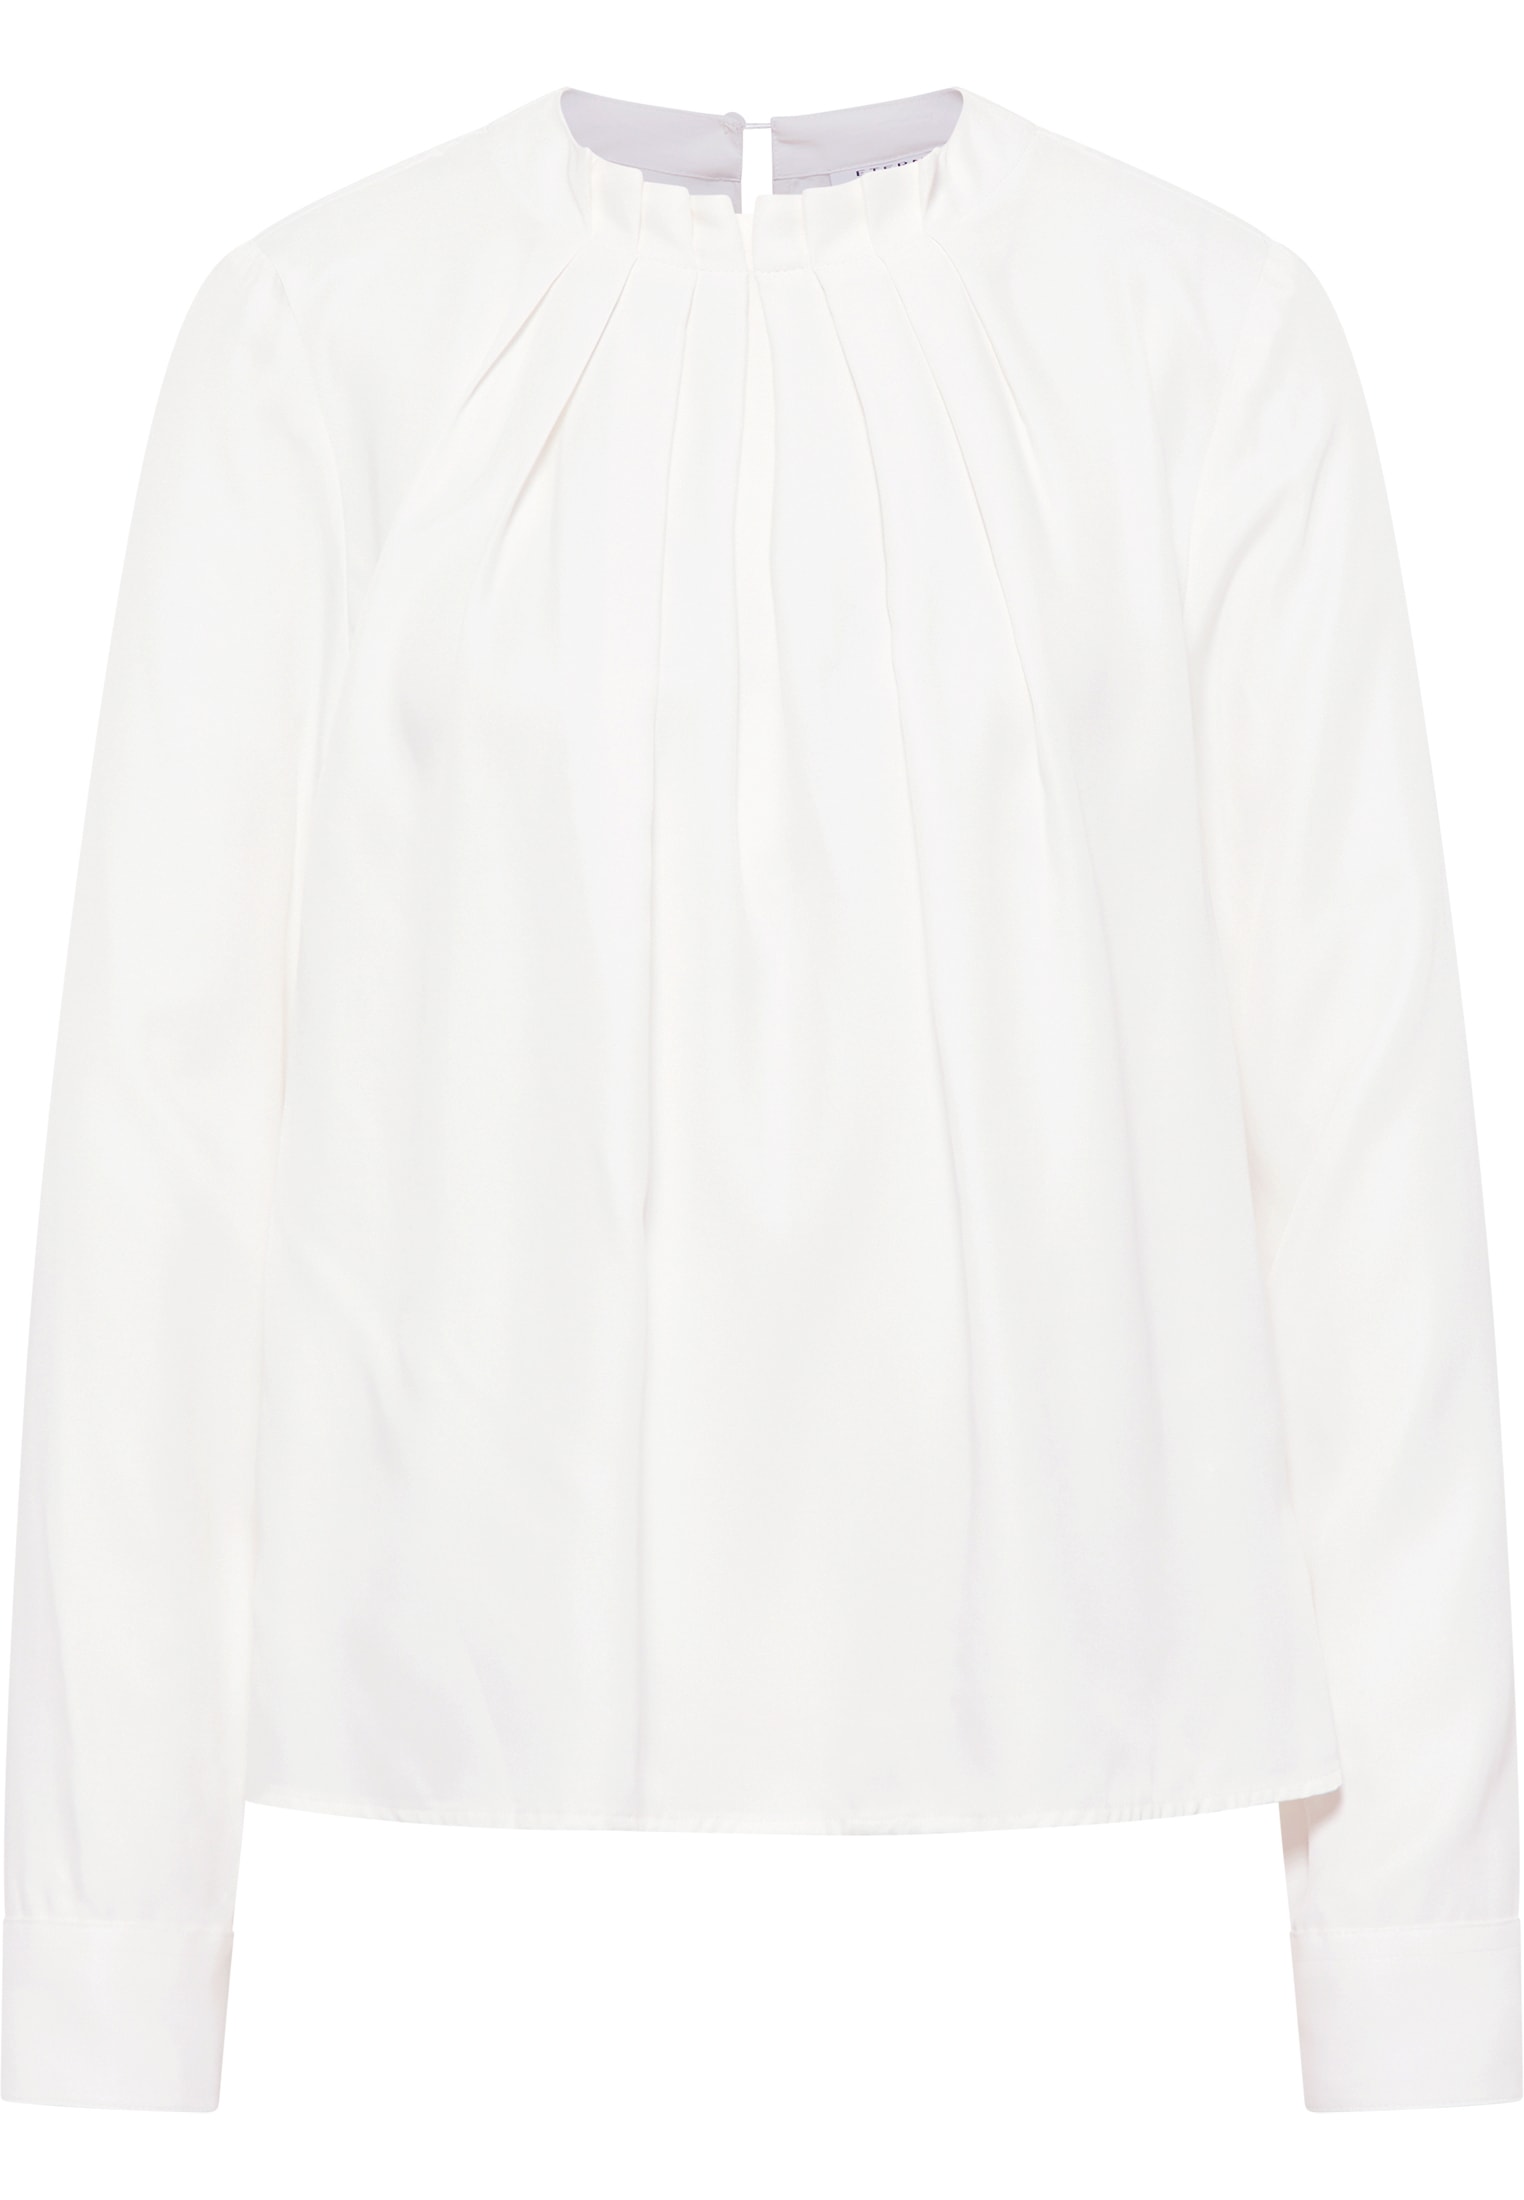 Viscose Shirt Bluse in off-white unifarben | off-white | 40 | Langarm |  2BL04240-00-02-40-1/1